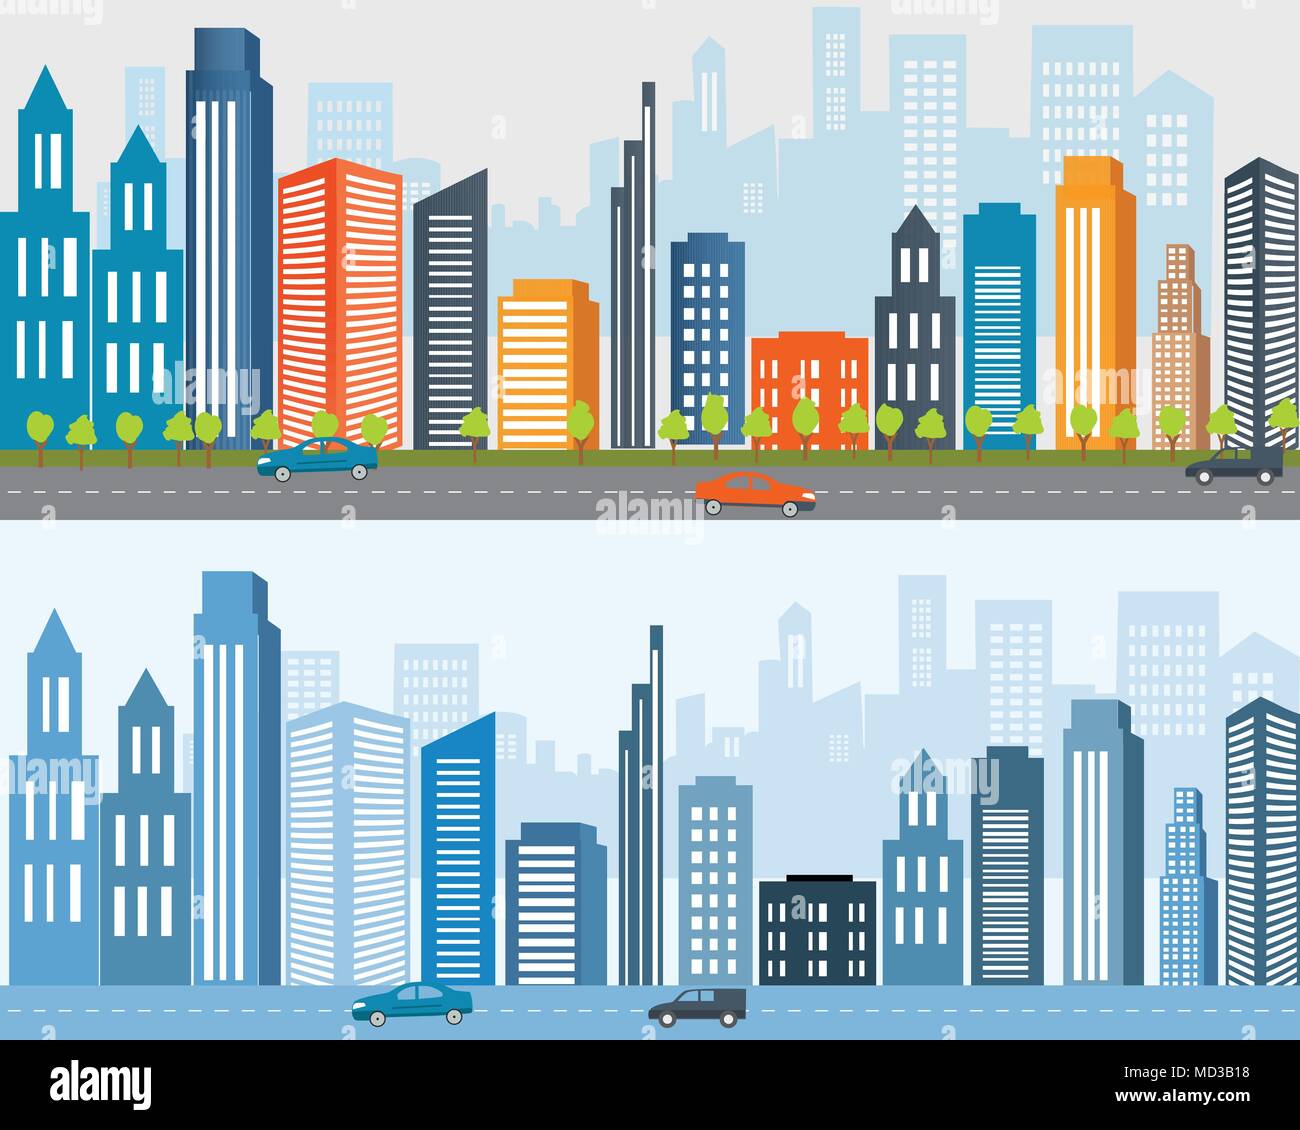 Flat designed banners, Big city life, Urban landscape.City urban design, City life. Real estate advertisement Stock Vector